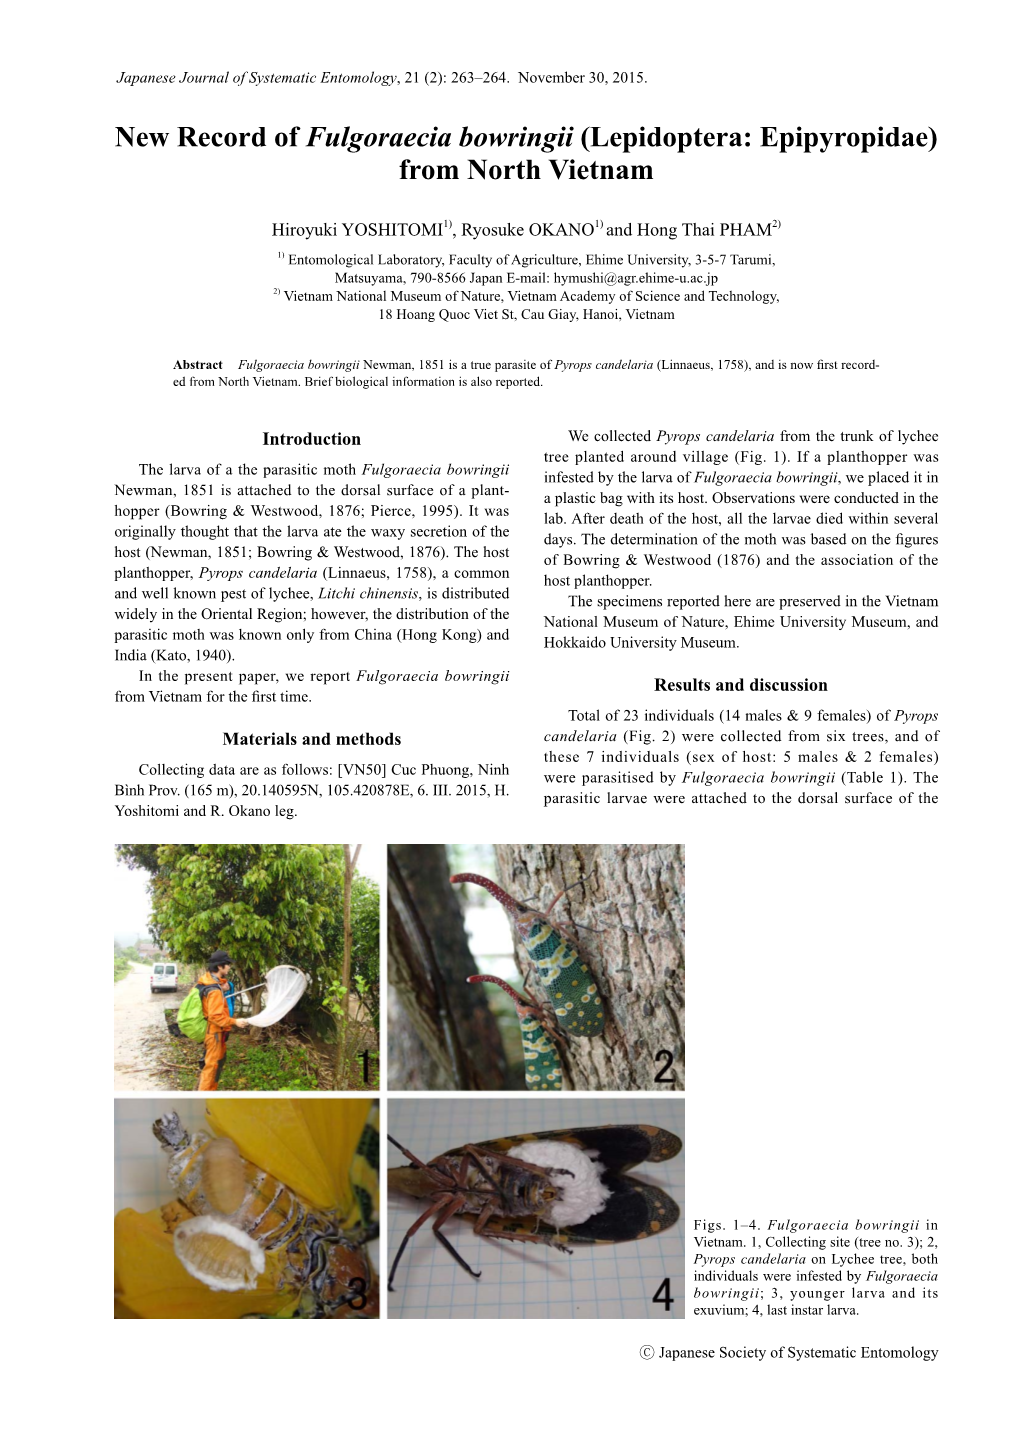 New Record of Fulgoraecia Bowringii (Lepidoptera: Epipyropidae) from North Vietnam